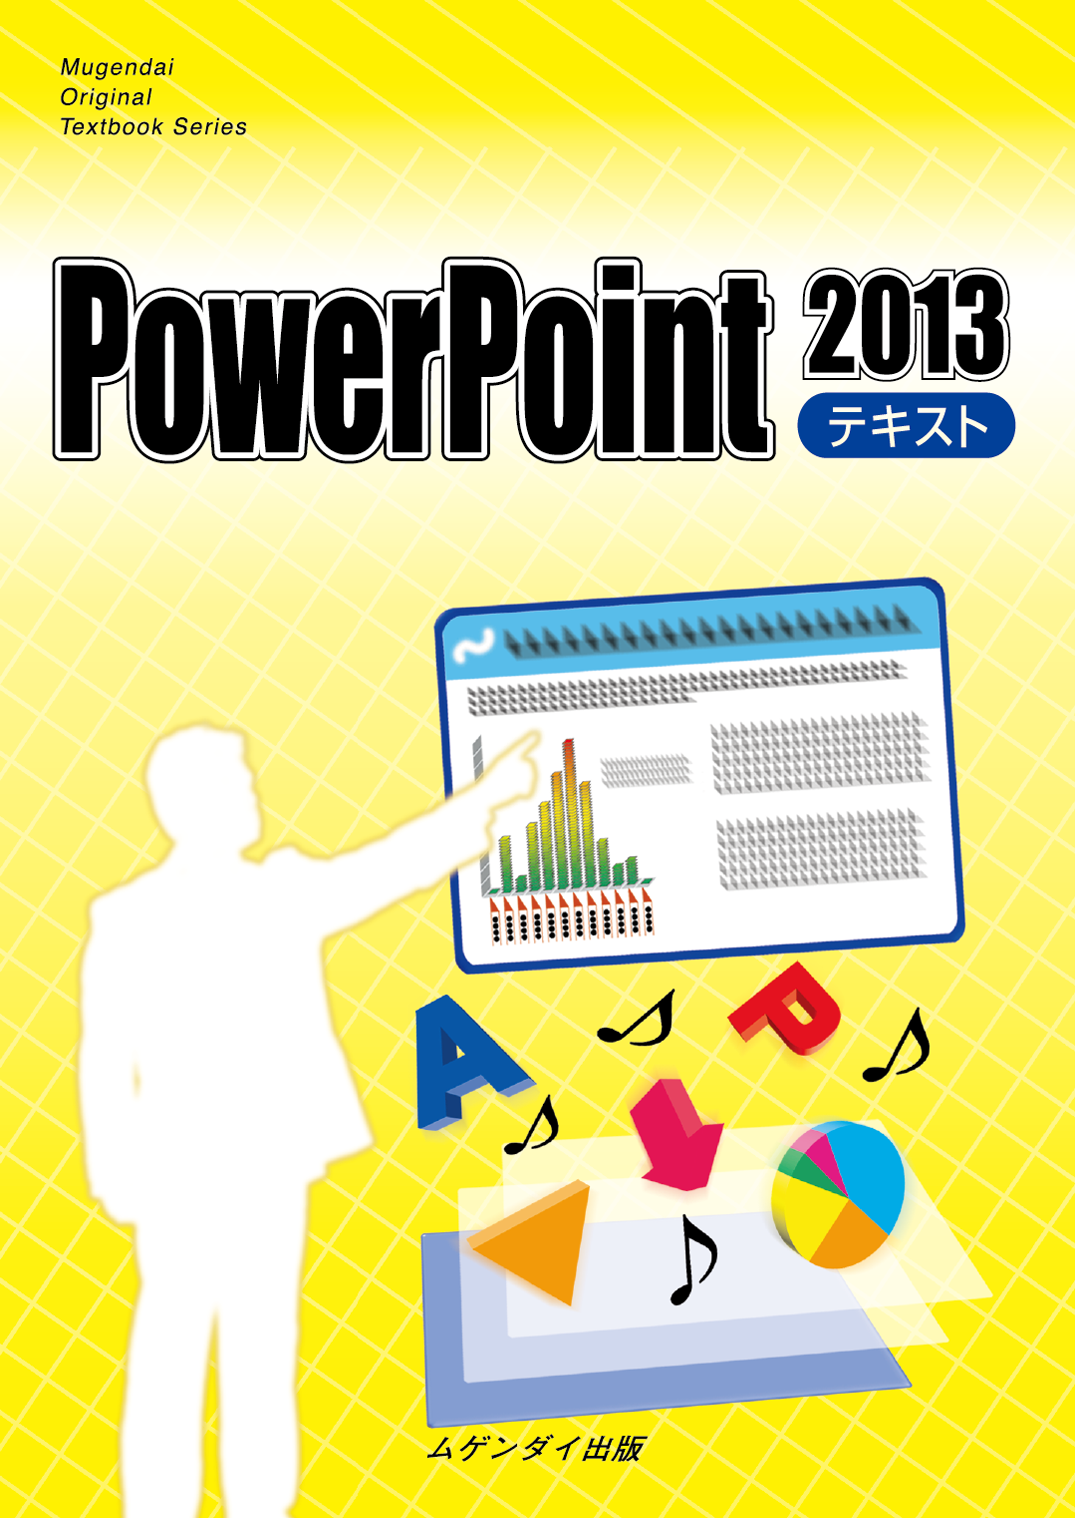 PowerPoint 2013 eLXg